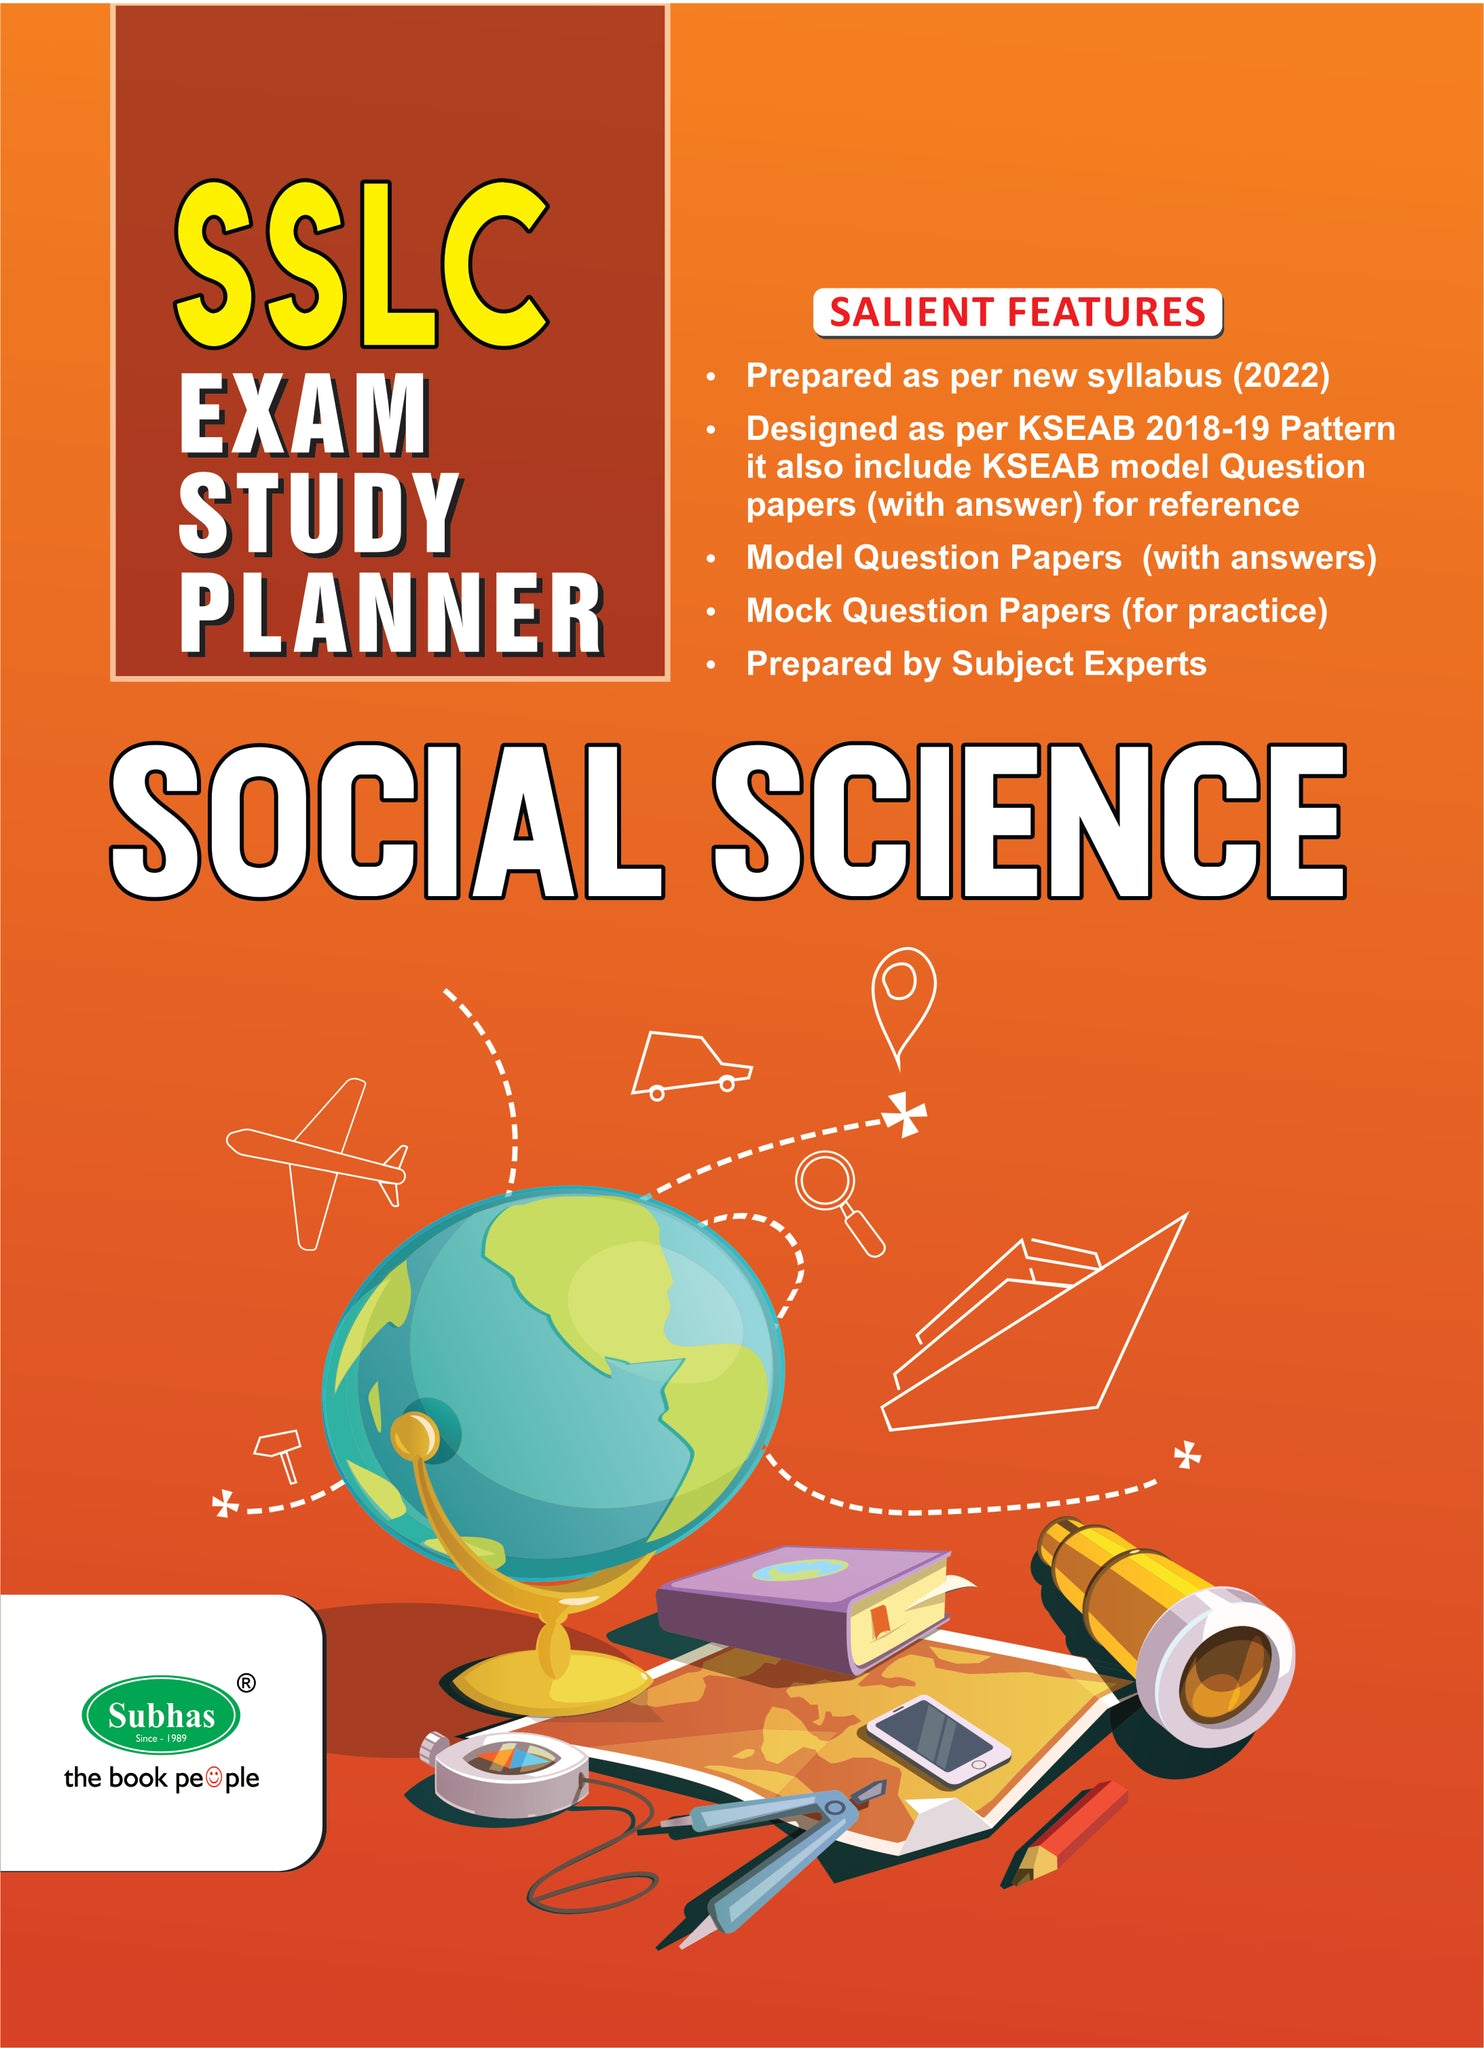 10TH EXAM STUDY PLANNER SOCIAL SCIENCE